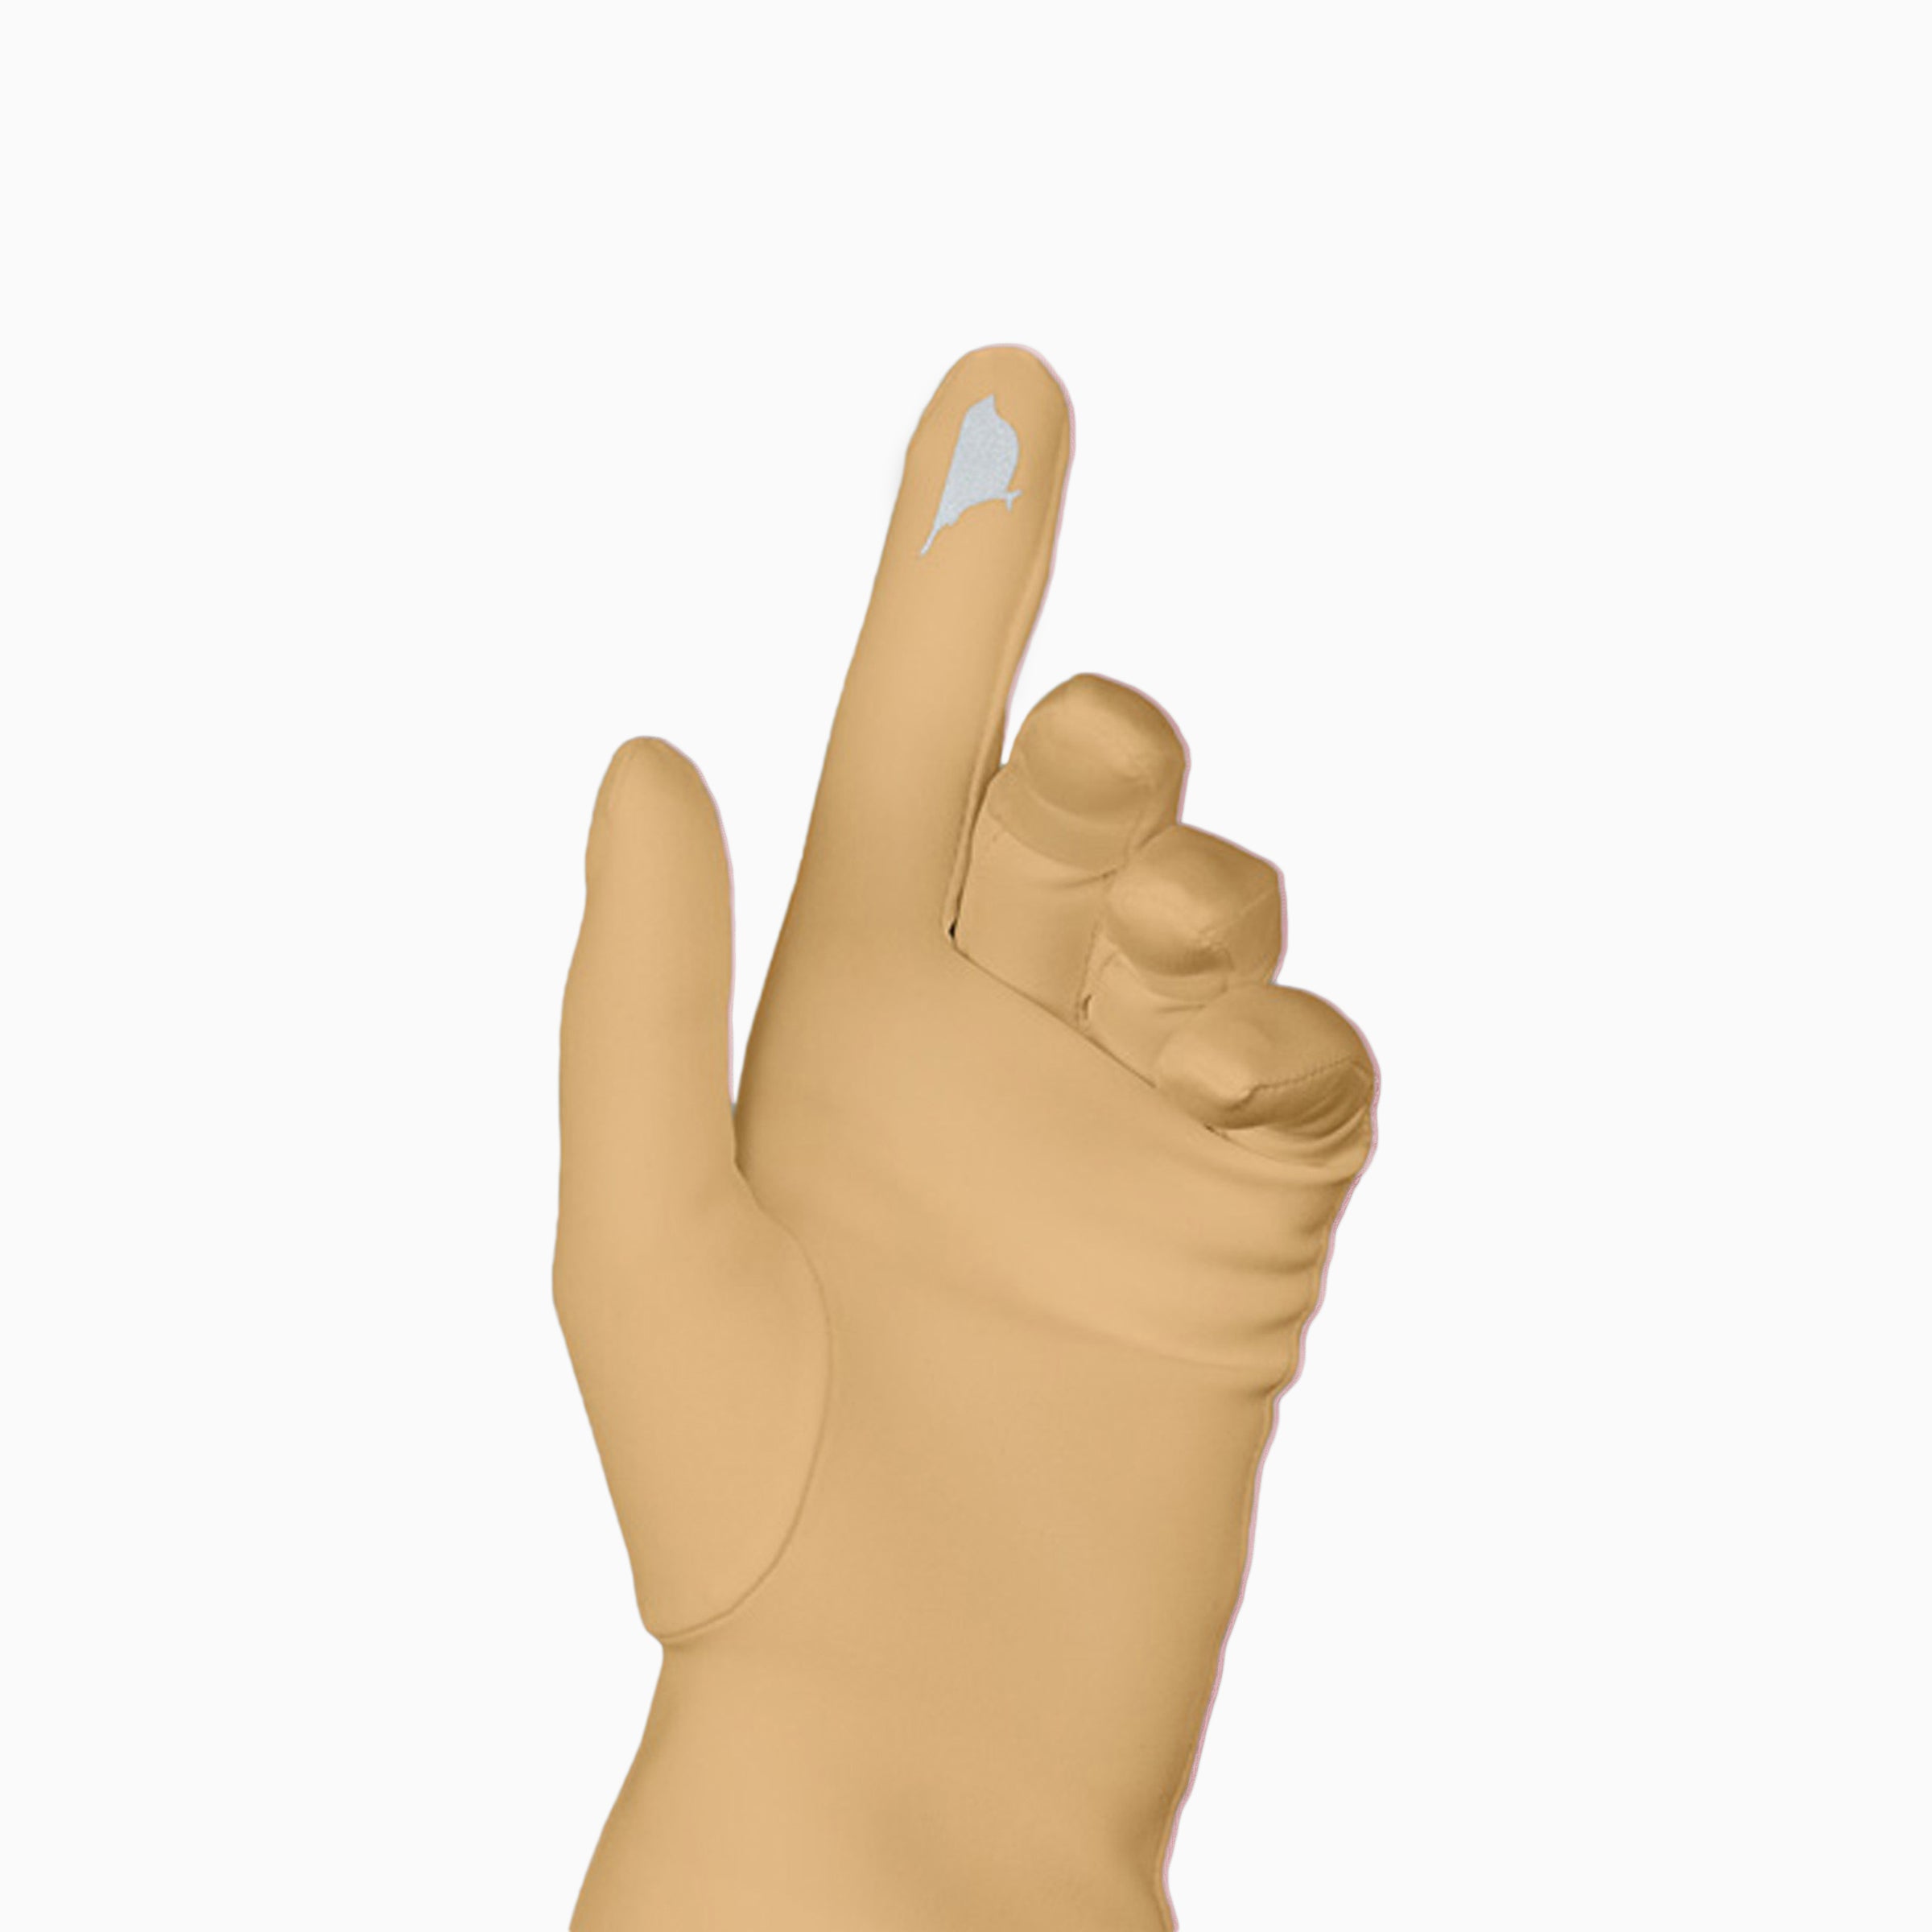 Beige women&#39;s glove against white background showing technology friendly index finger.